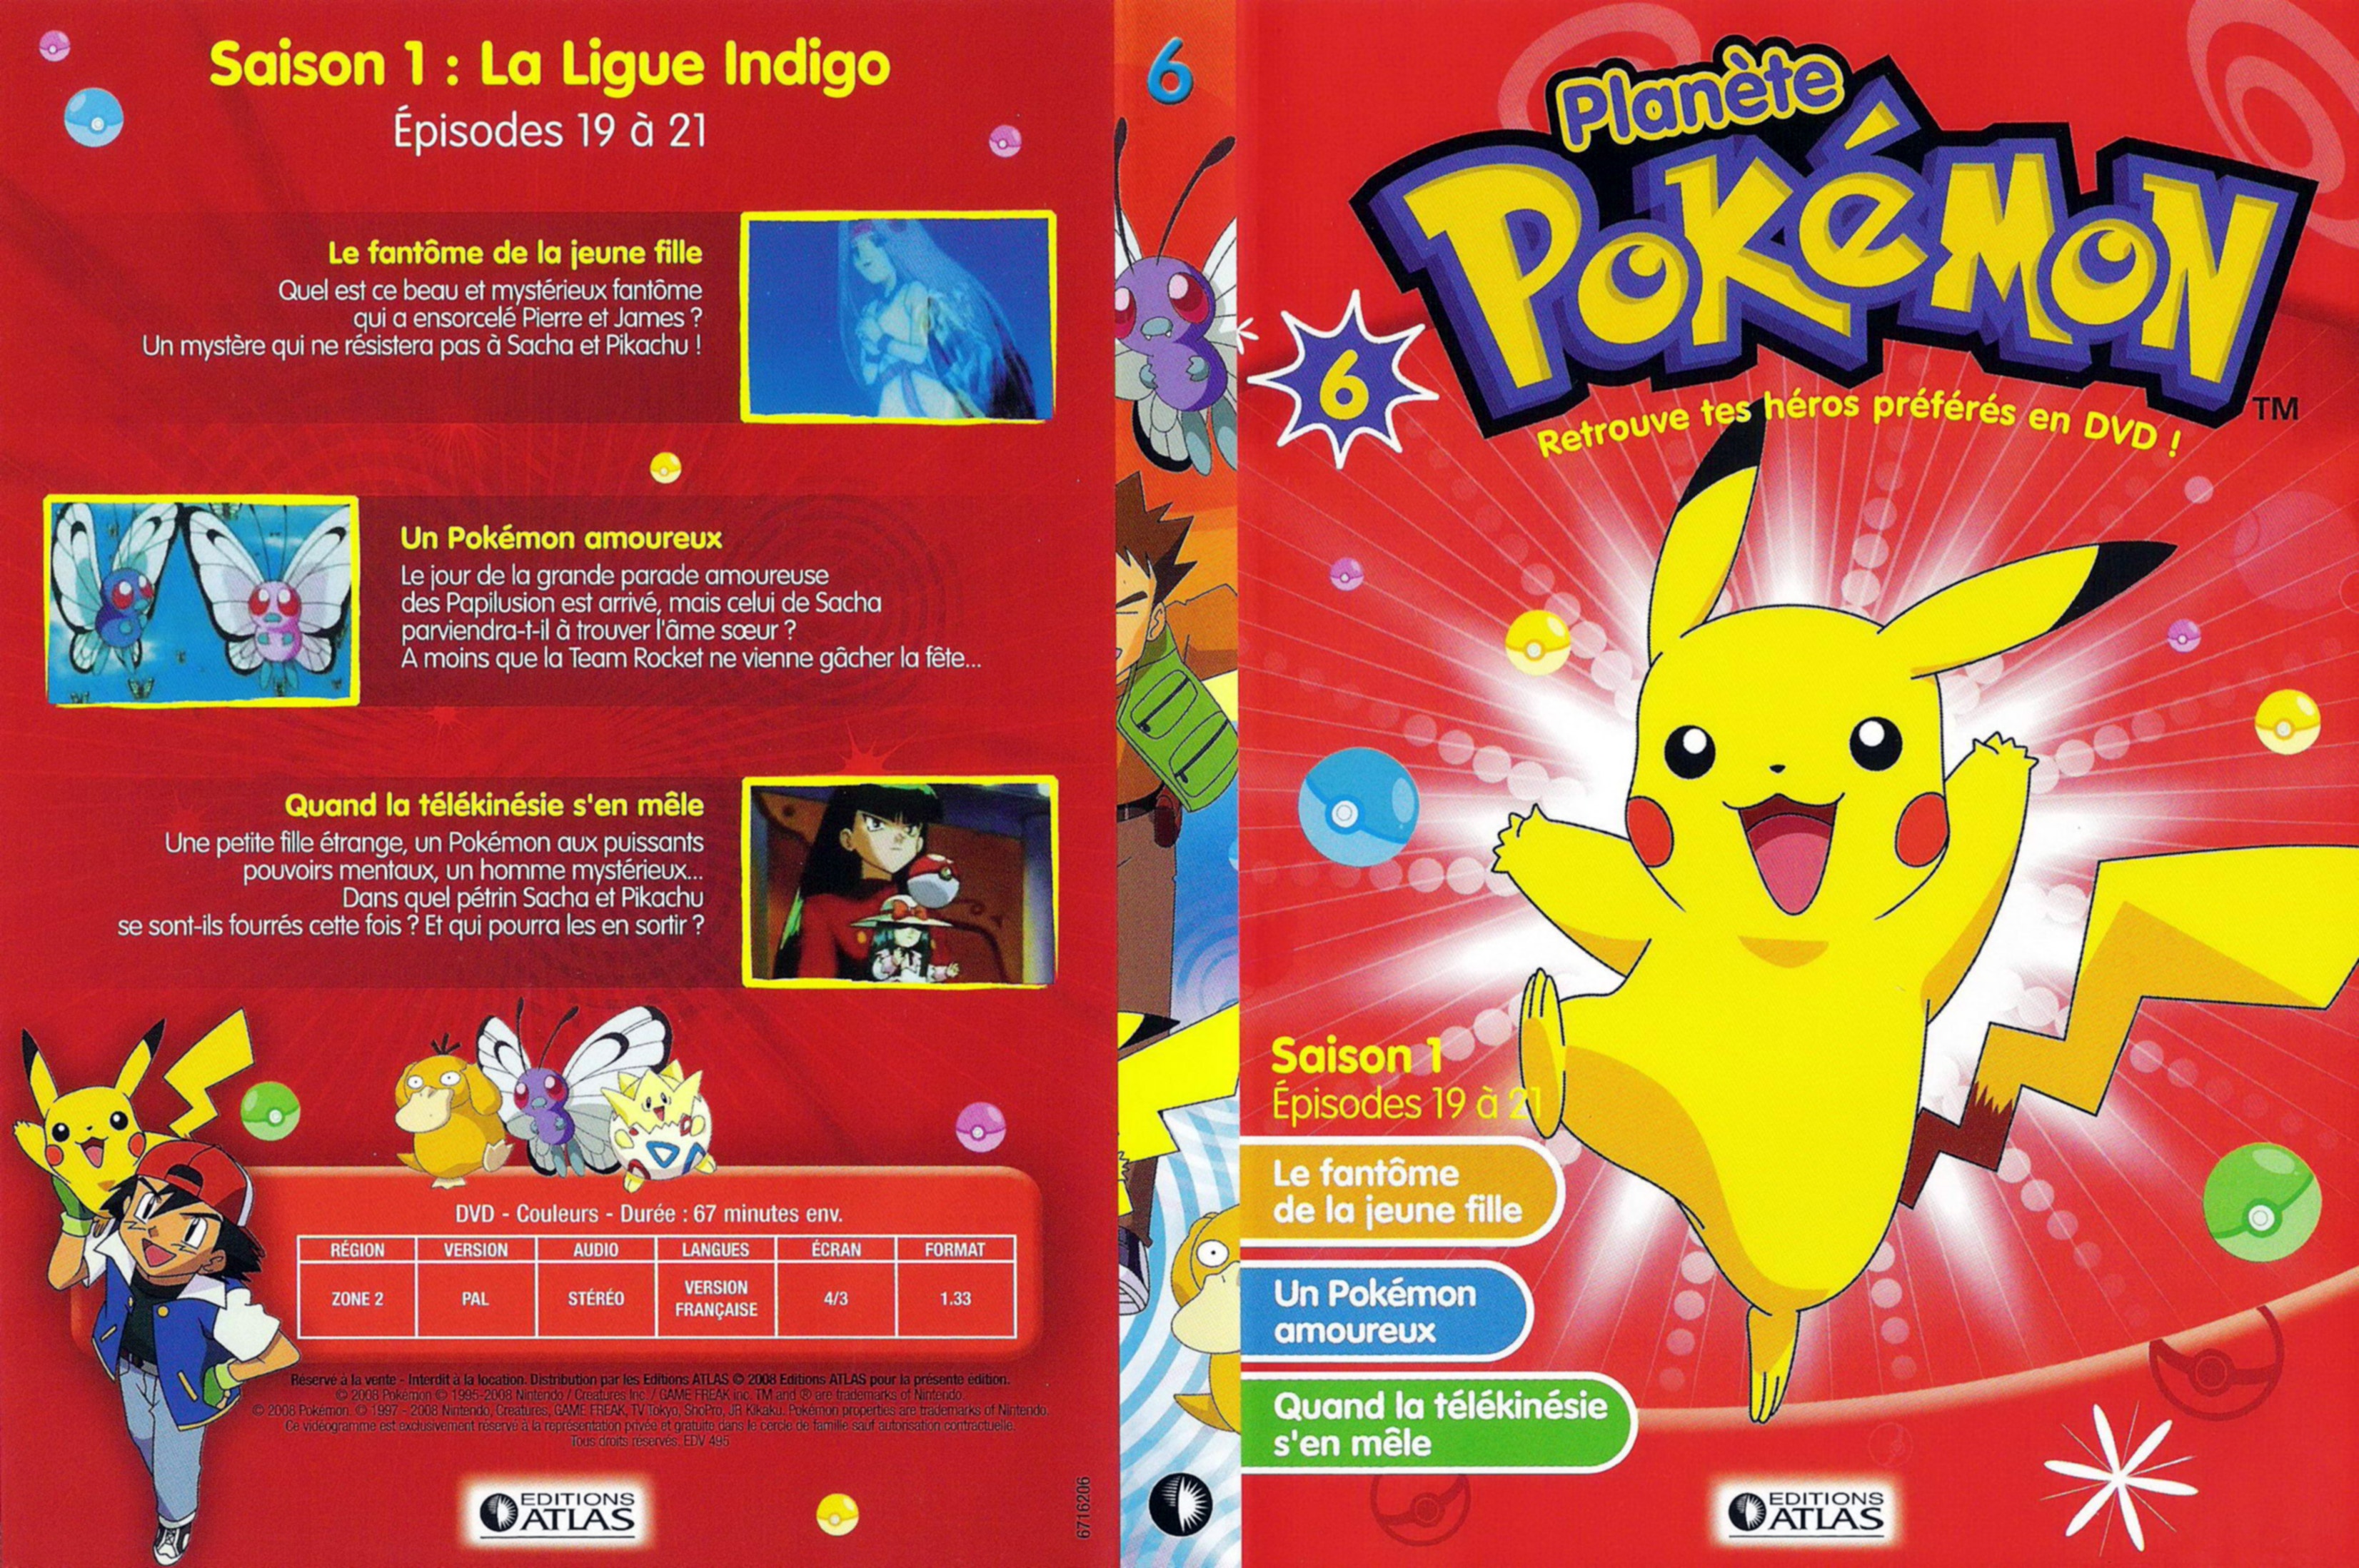 Jaquette DVD Plenete Pokemon vol 06